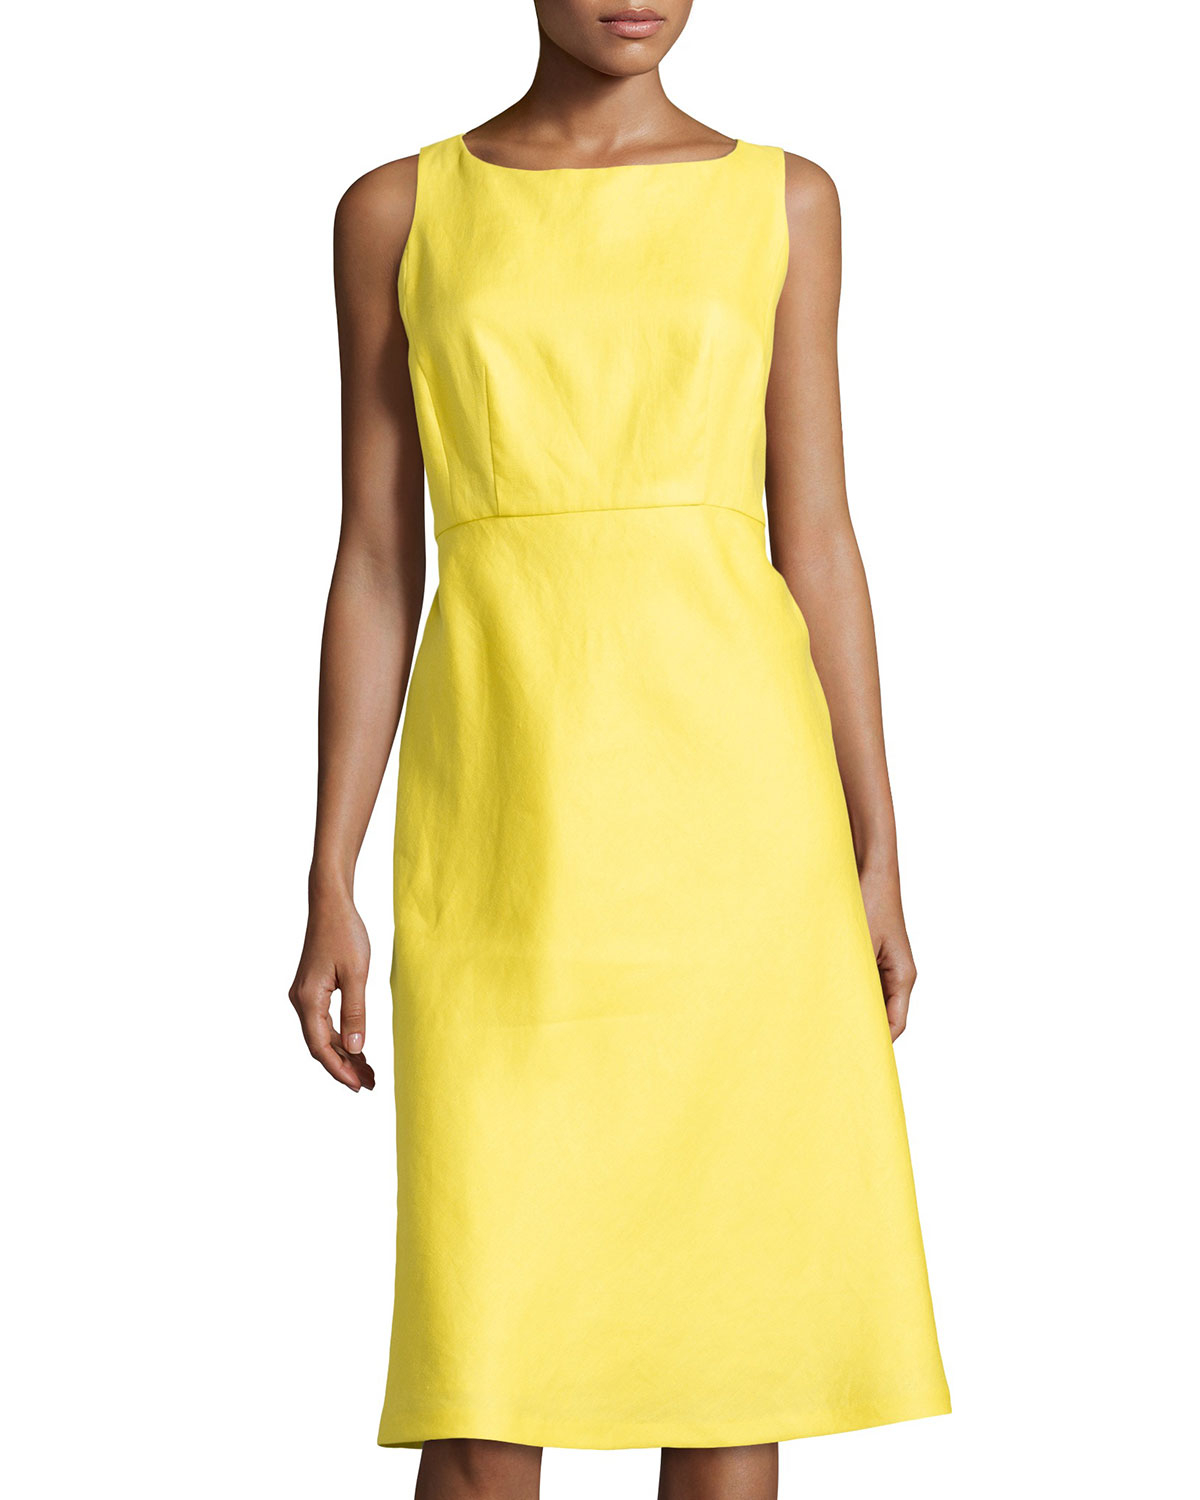 Lafayette 148 new york Dora Linen Sleeveless Dress in Yellow | Lyst